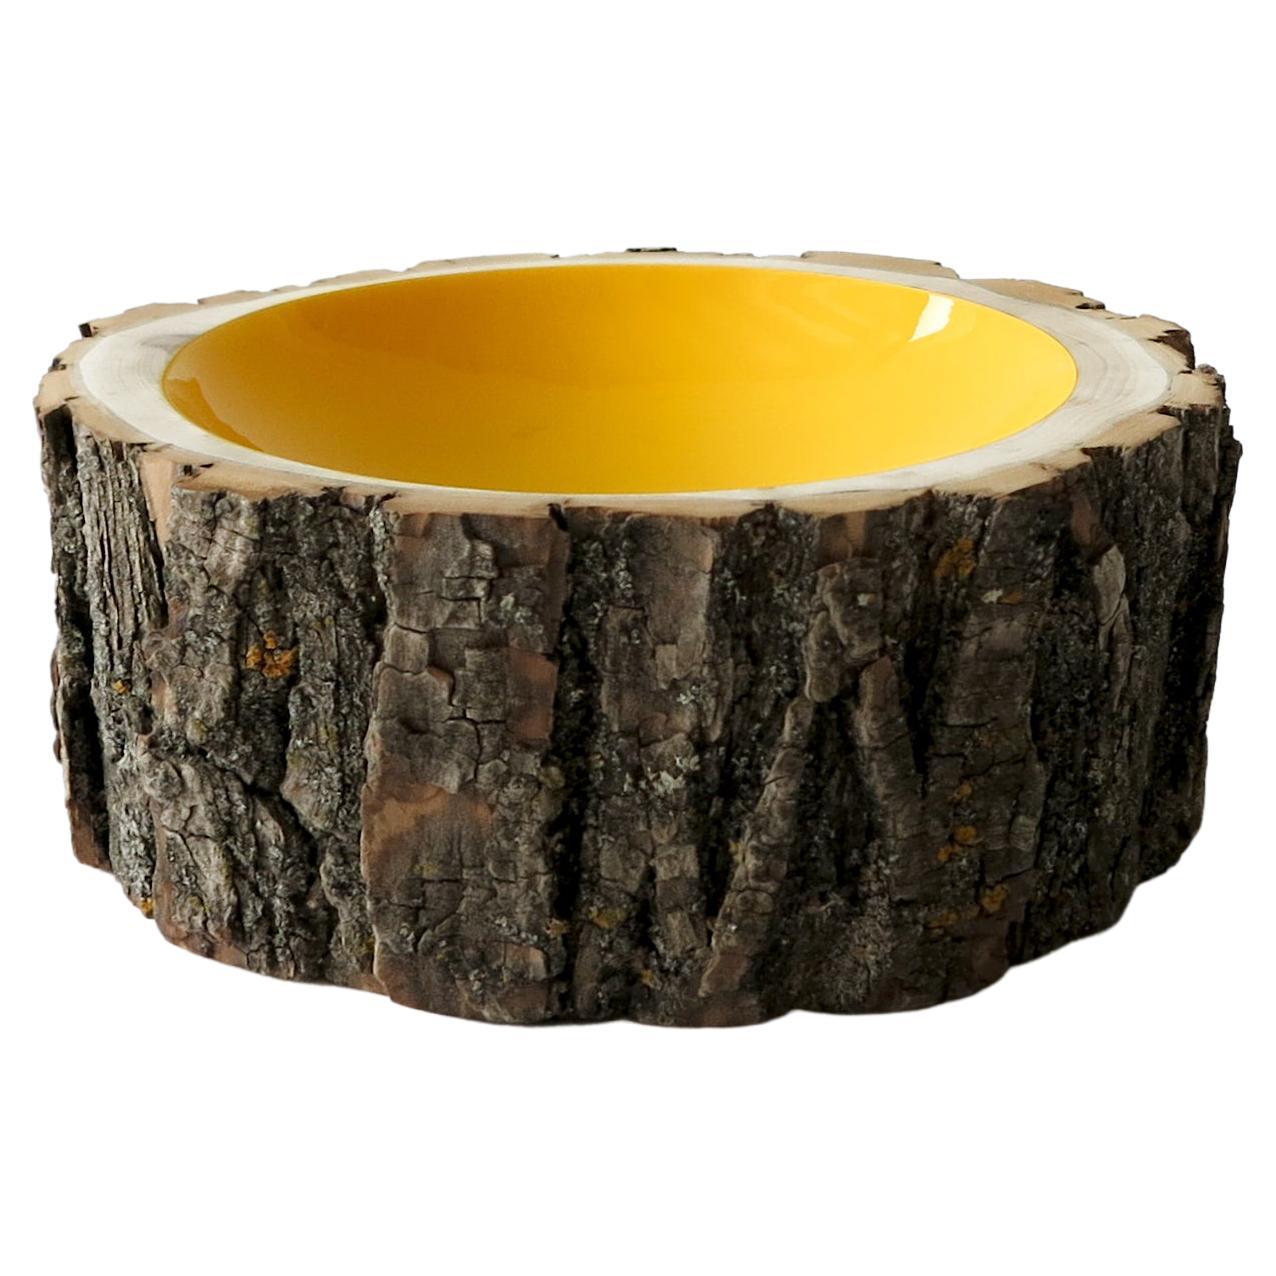 Lemon Größe 8 Log Bowl von Loyal Loot Made to Order Handgefertigt aus recyceltem Holz